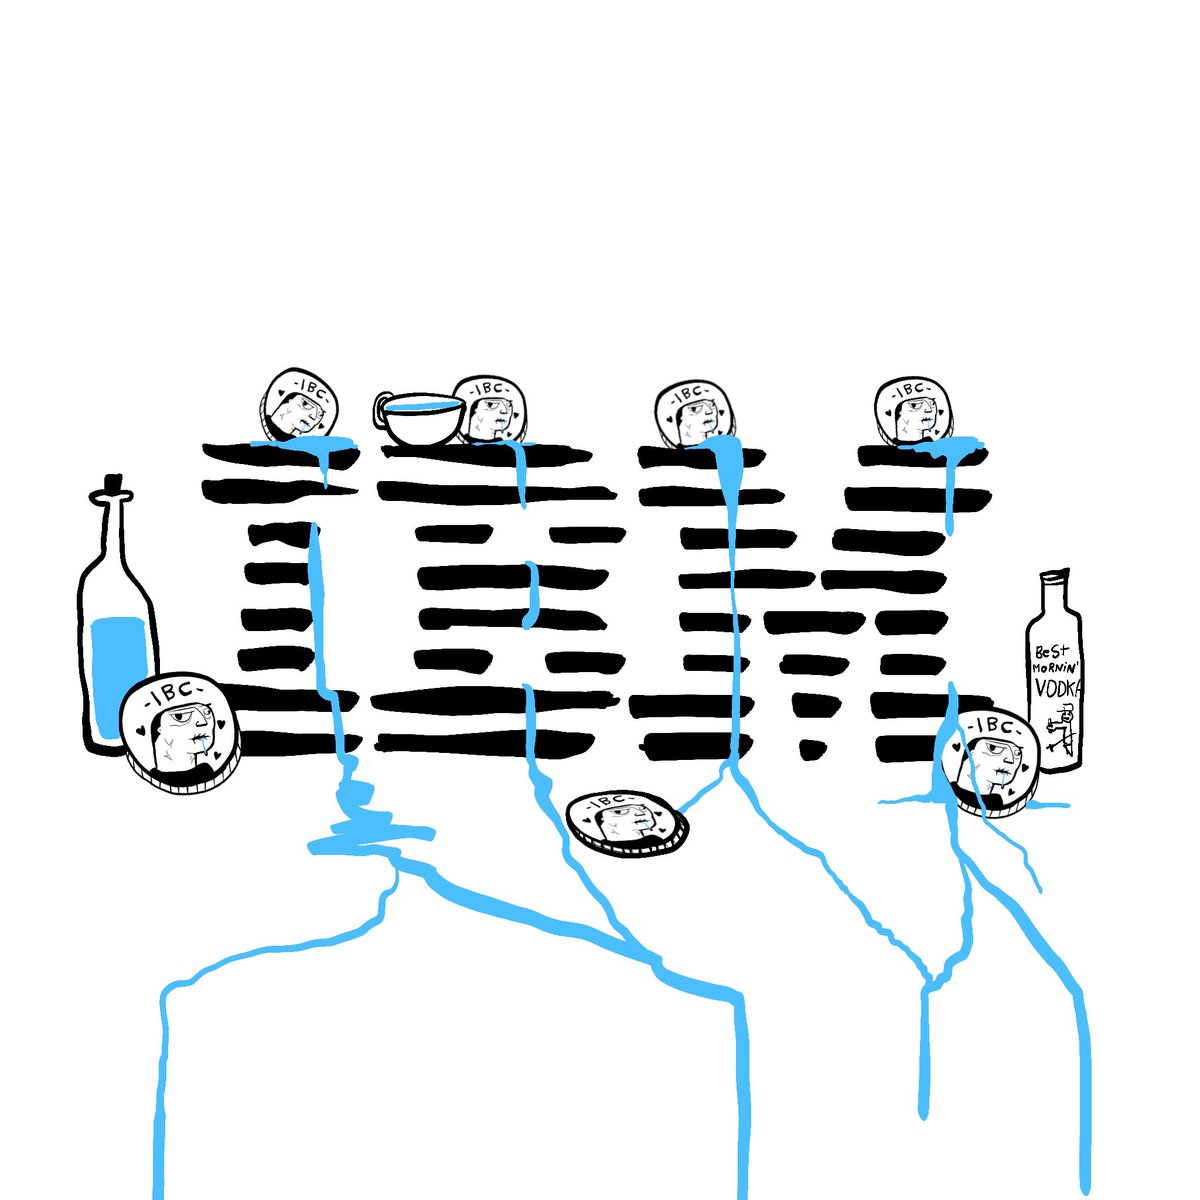 IBM

ImBeCiLe MoRnin 🤤